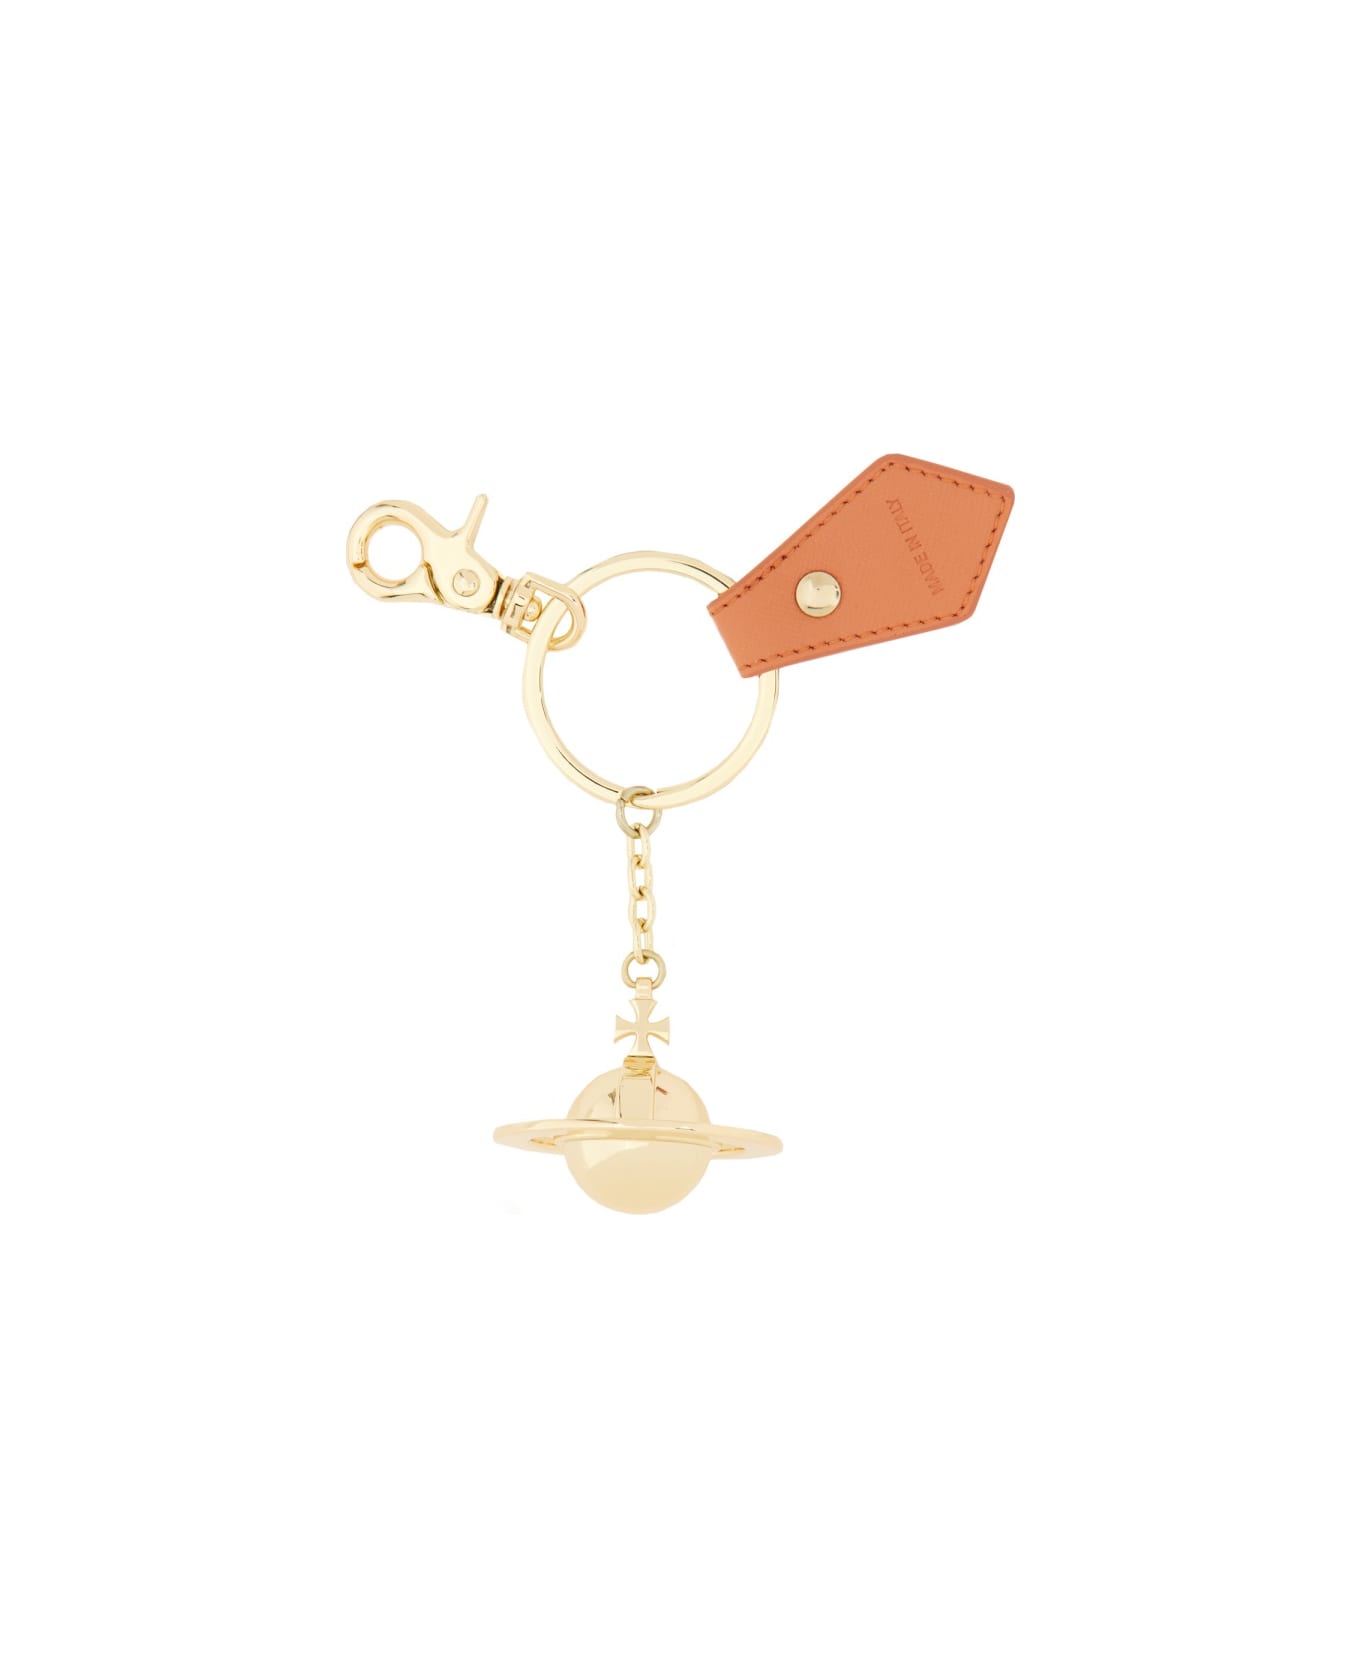 Vivienne Westwood 3d Orb Keychain - GOLD